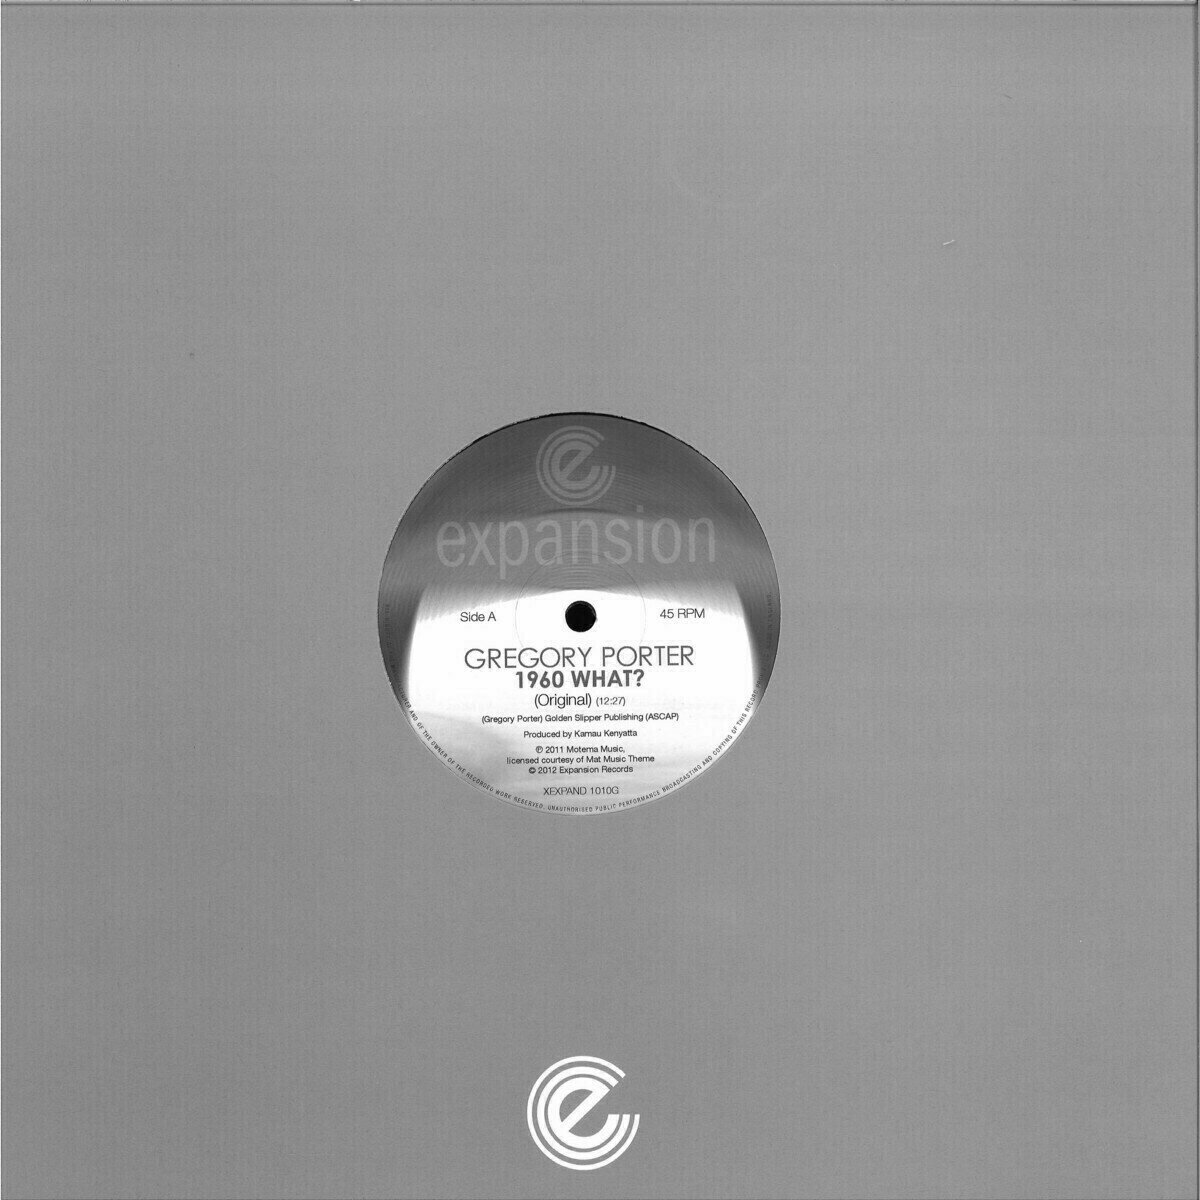 Disque vinyle Gregory Porter - 1960 What? (Original Mix) (12" Vinyl)